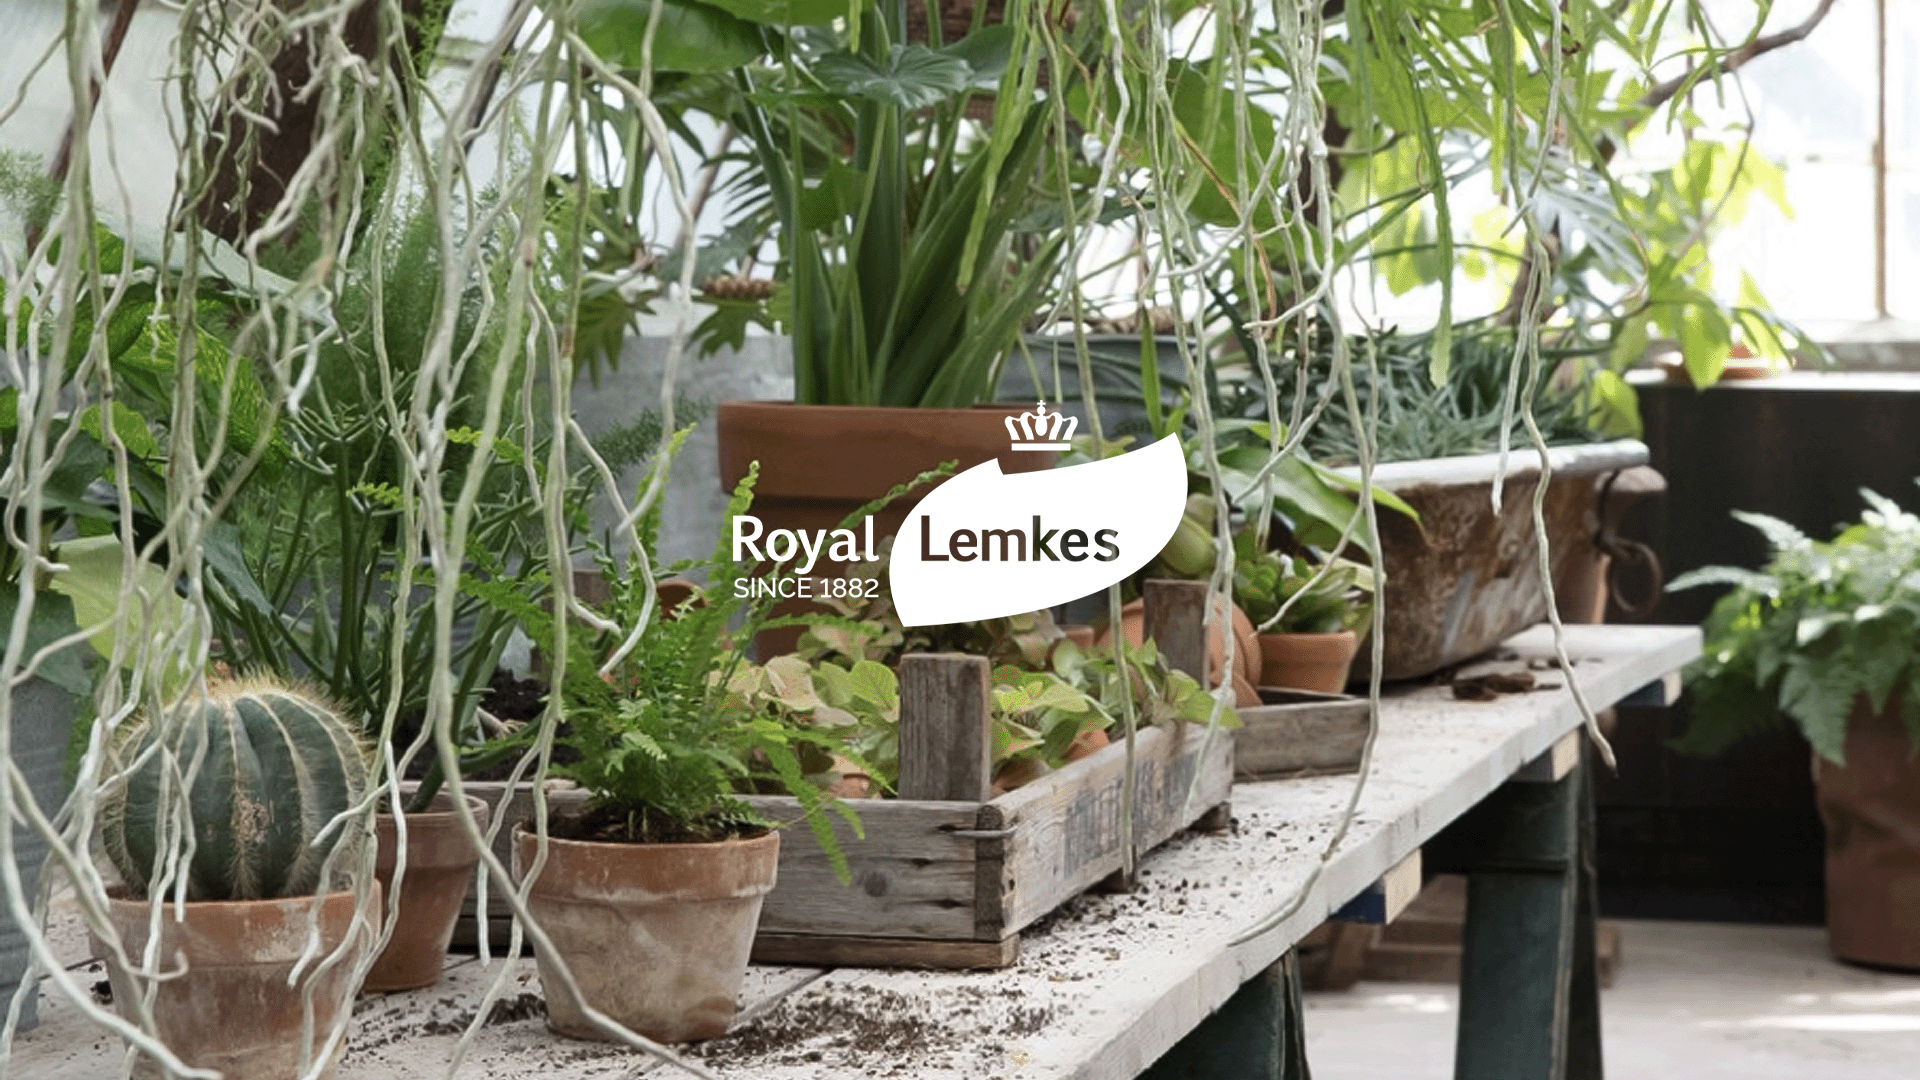 Royal lemkes featured